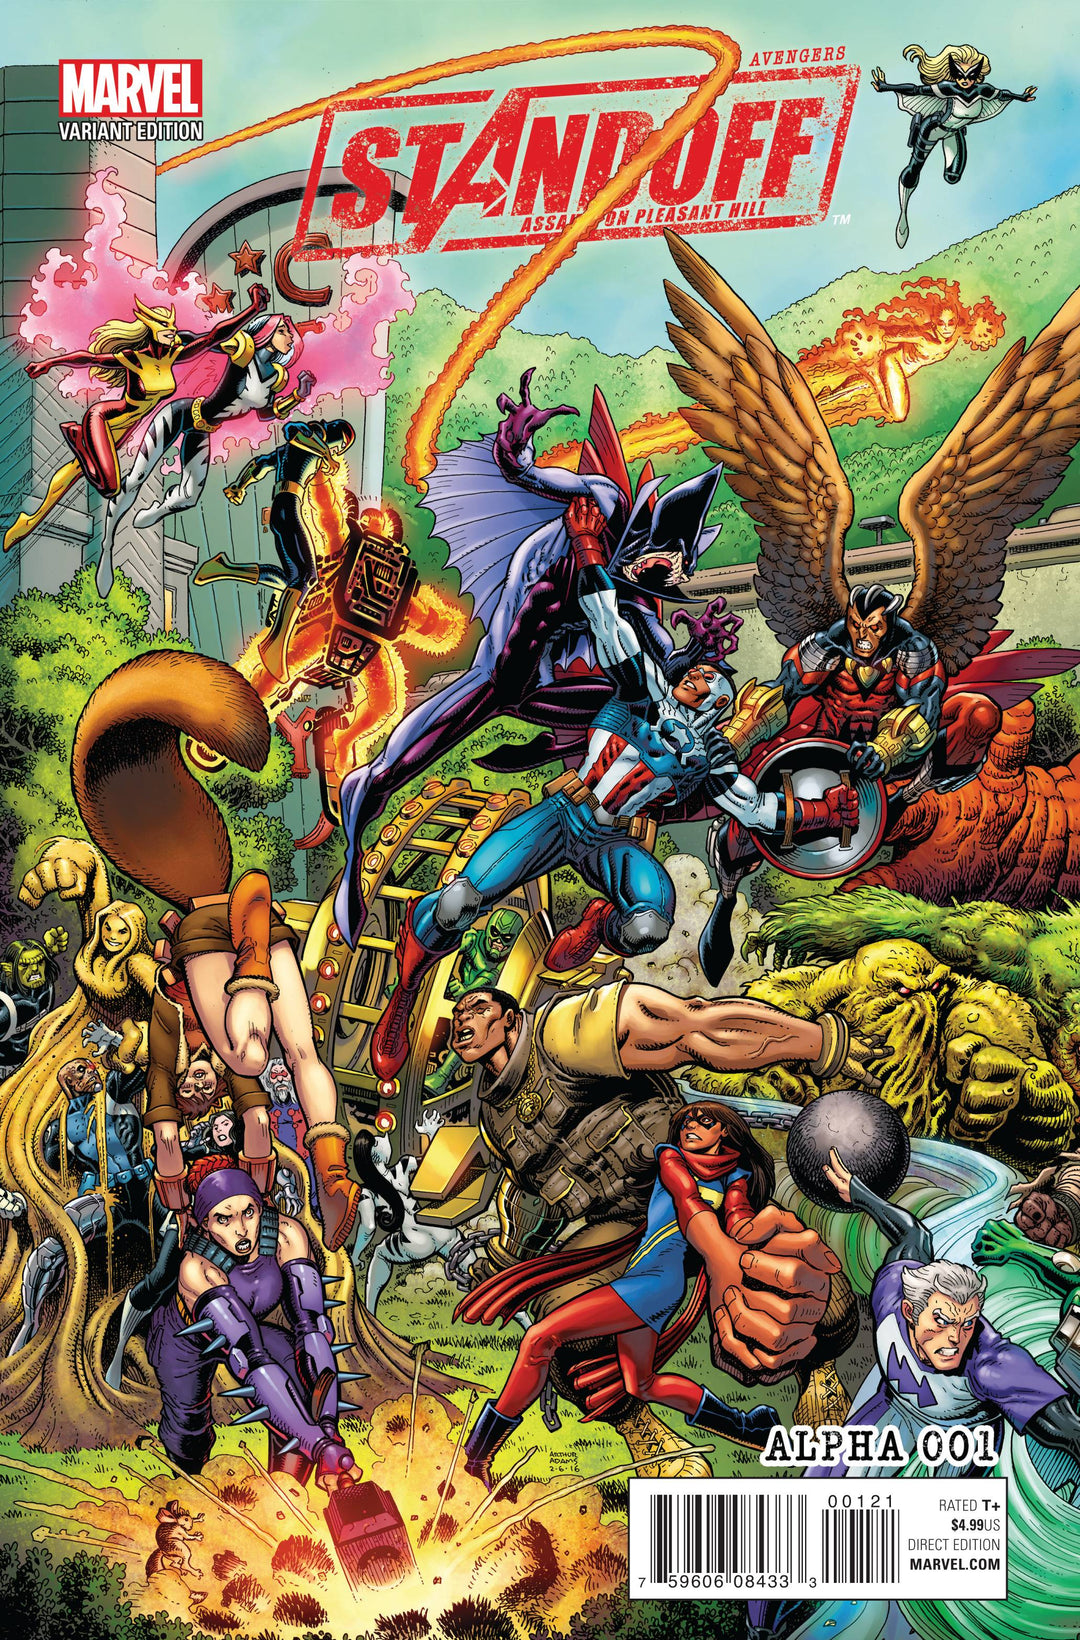 Avengers Standoff Assault On Pleasant Hill Alpha #1 Art Adams Variant ASO <BINS>